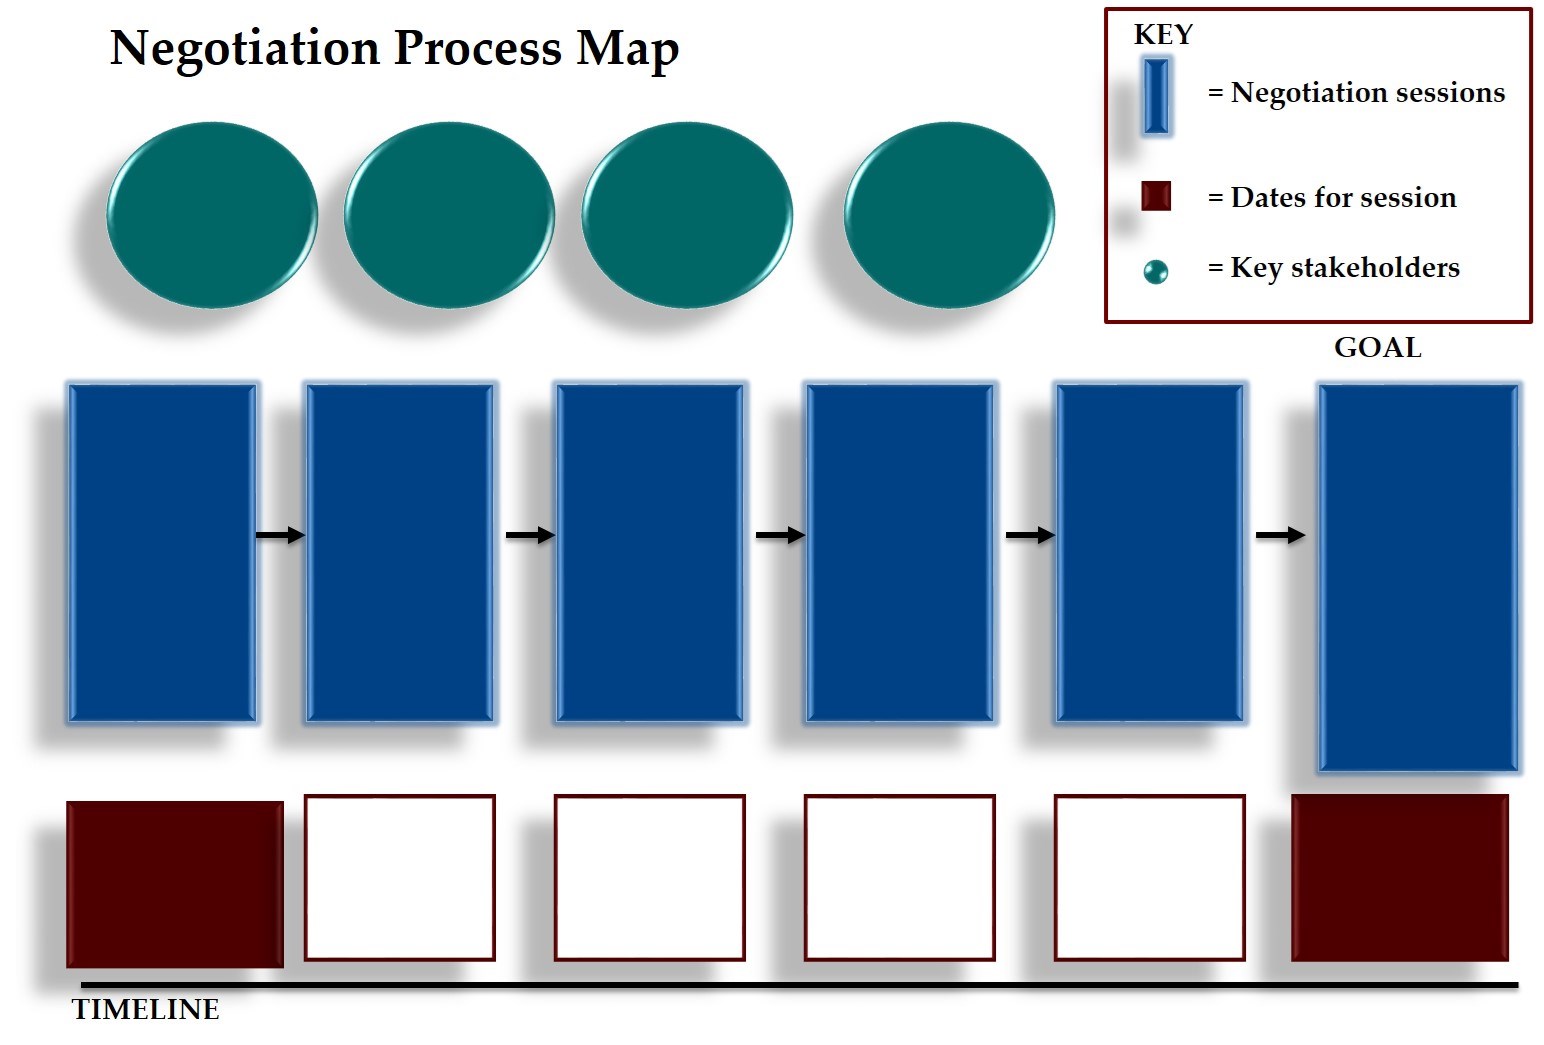 Ki ThoughtBridge's Negotiation Process Map